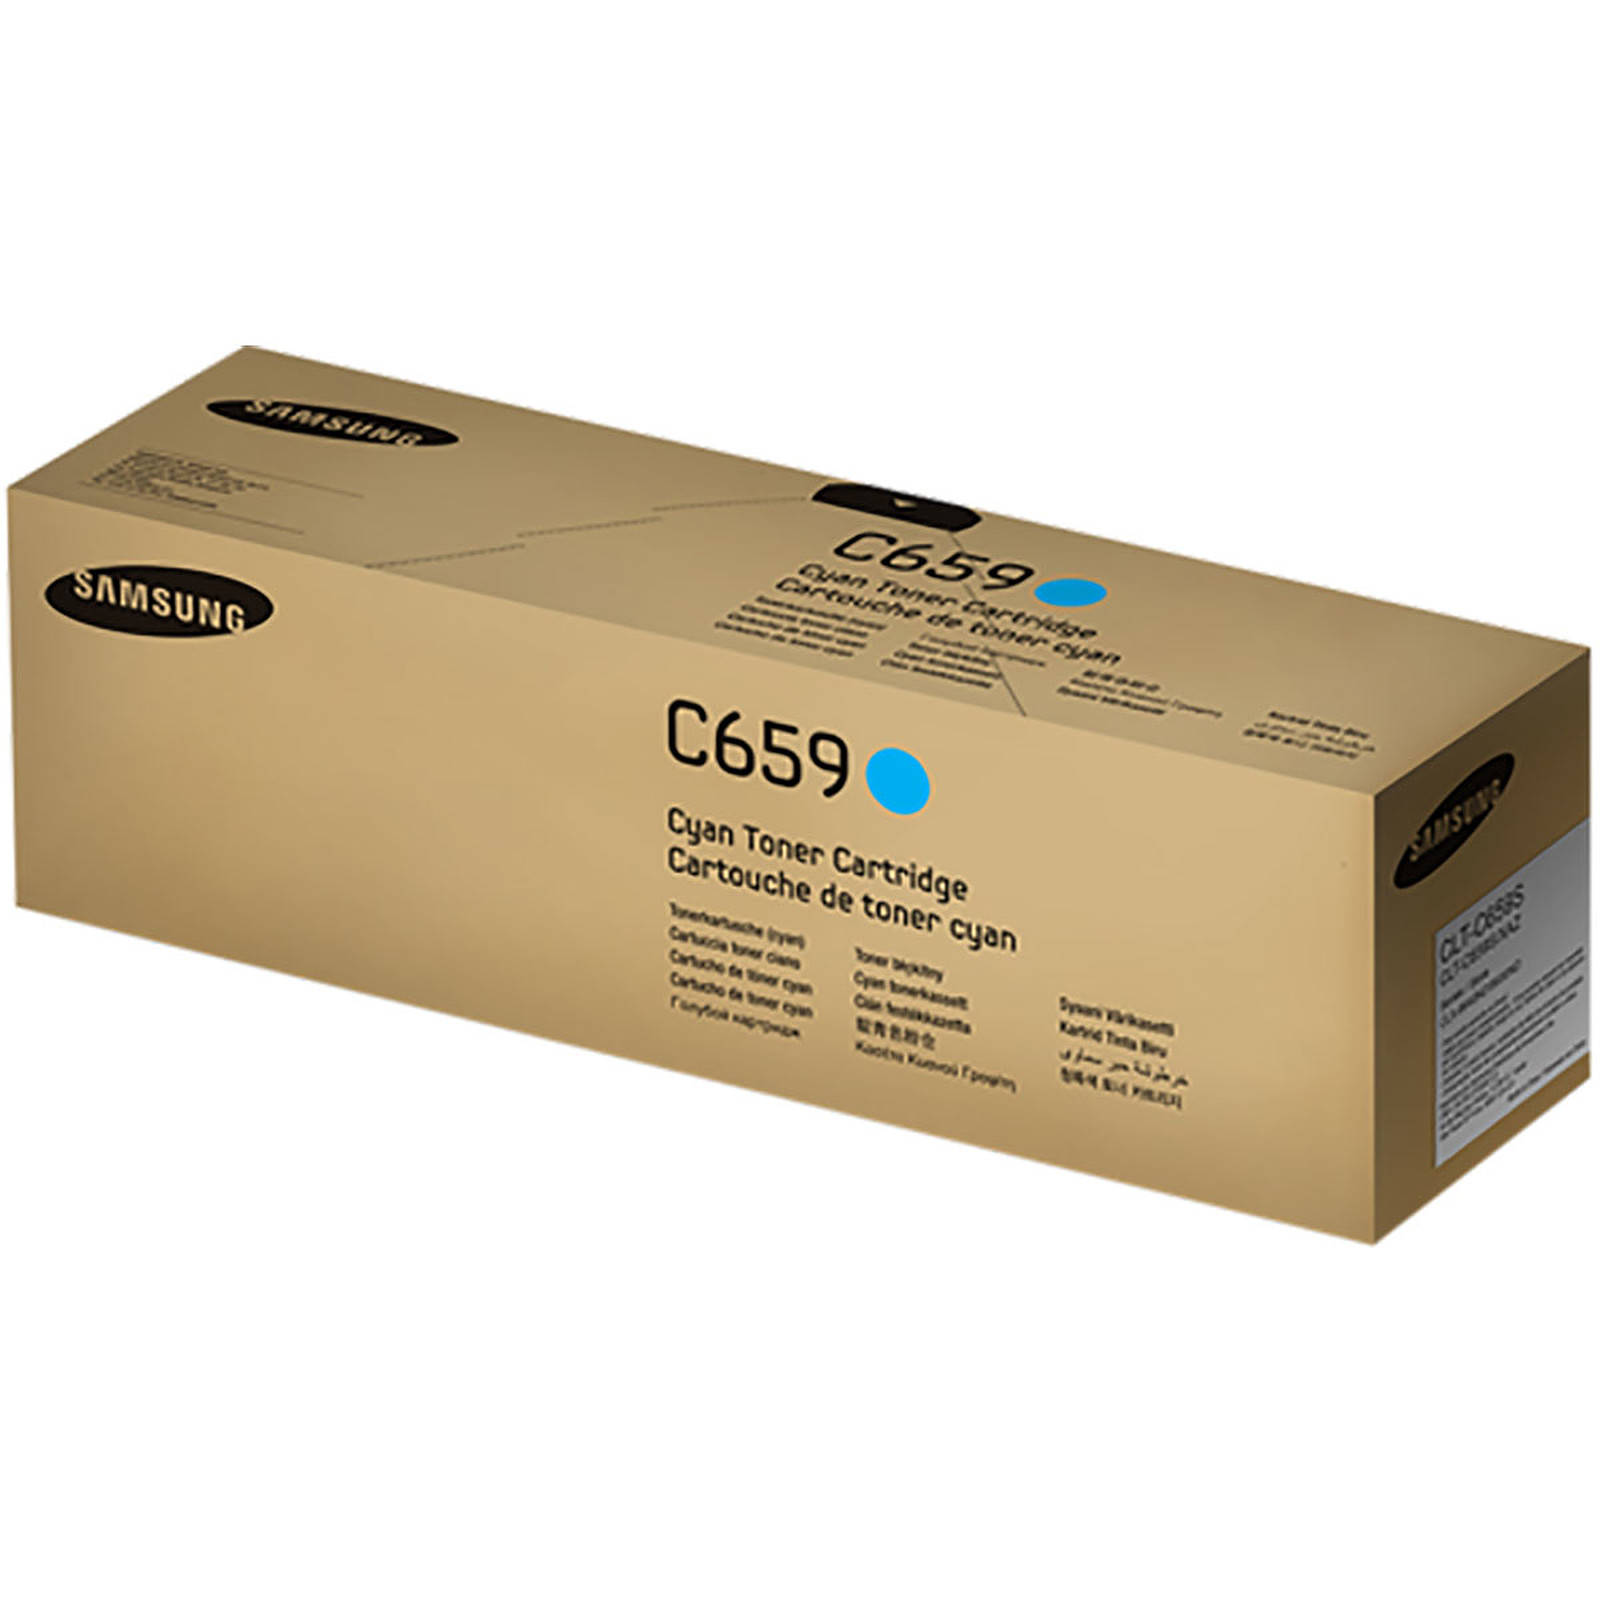 Samsung CLT-C659S - Toner imprimante Samsung